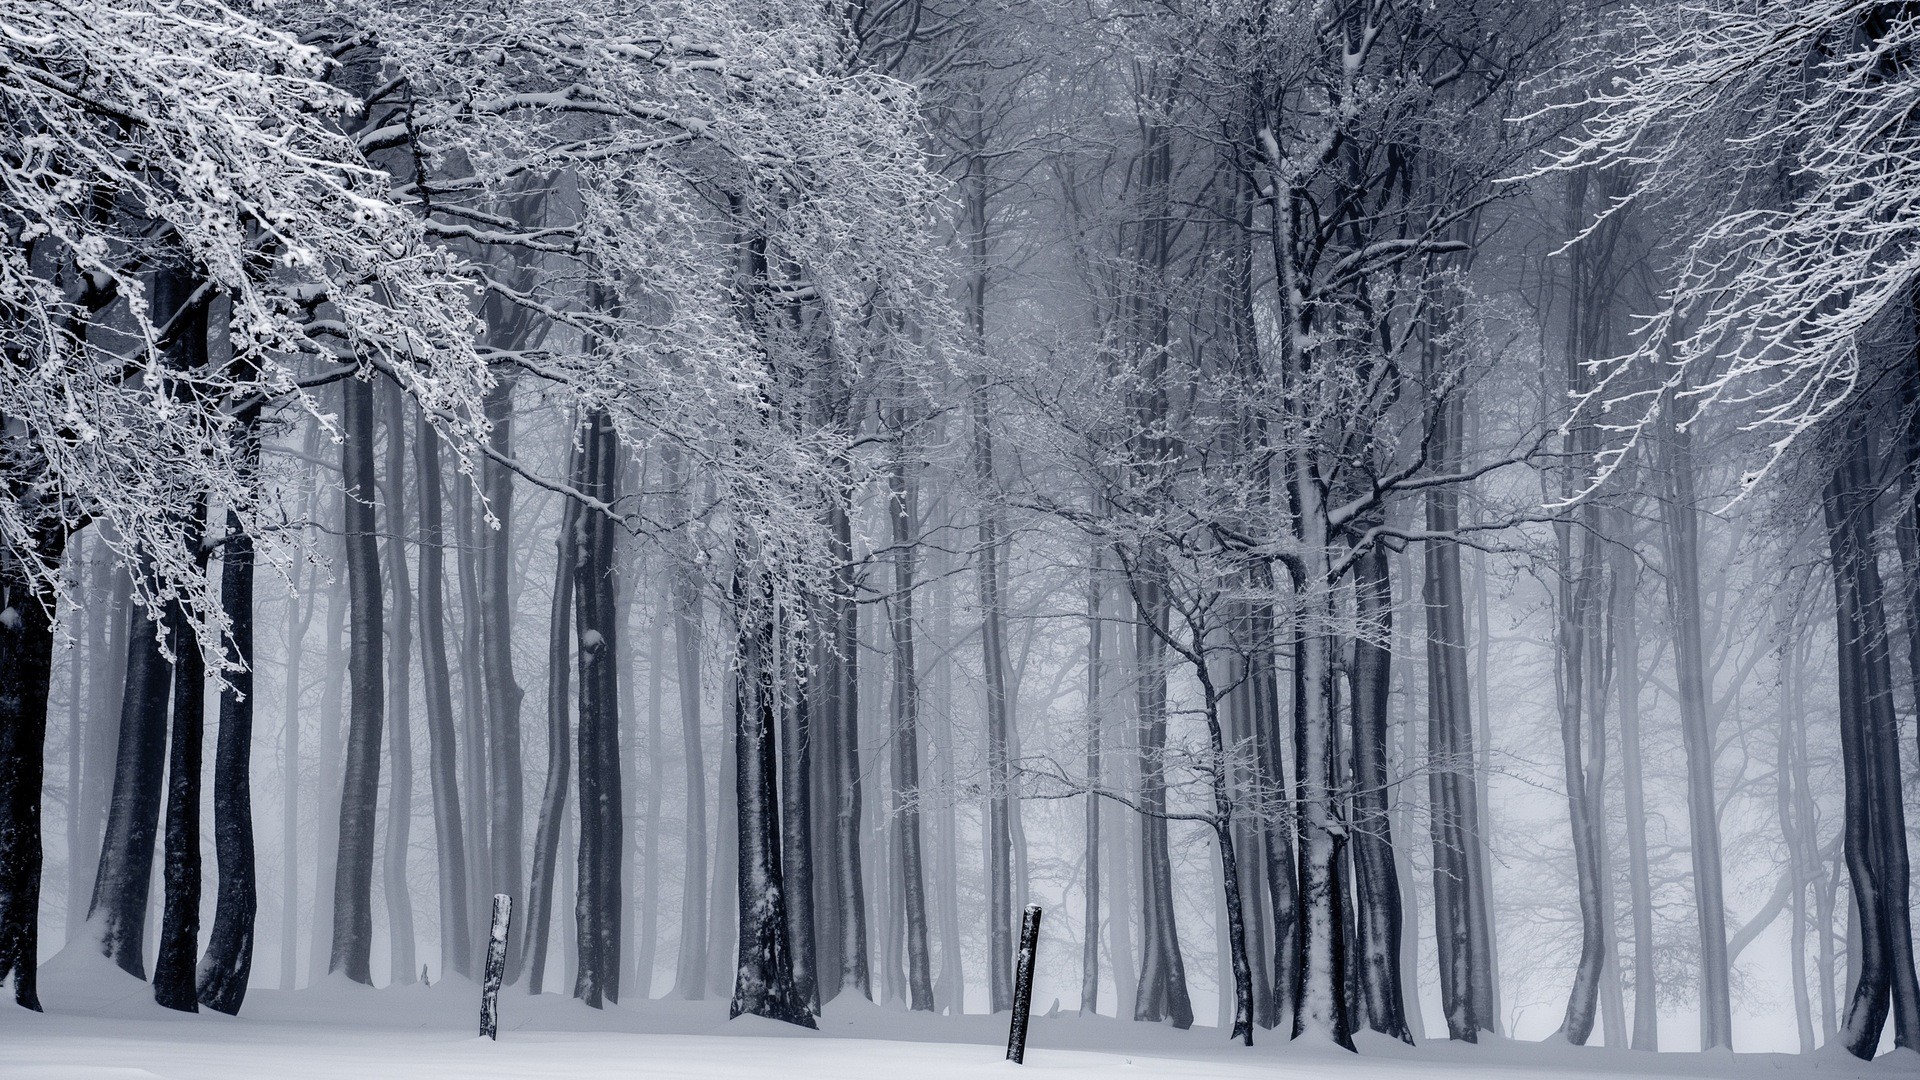 General 1920x1080 nature landscape trees forest winter snow monochrome mist branch